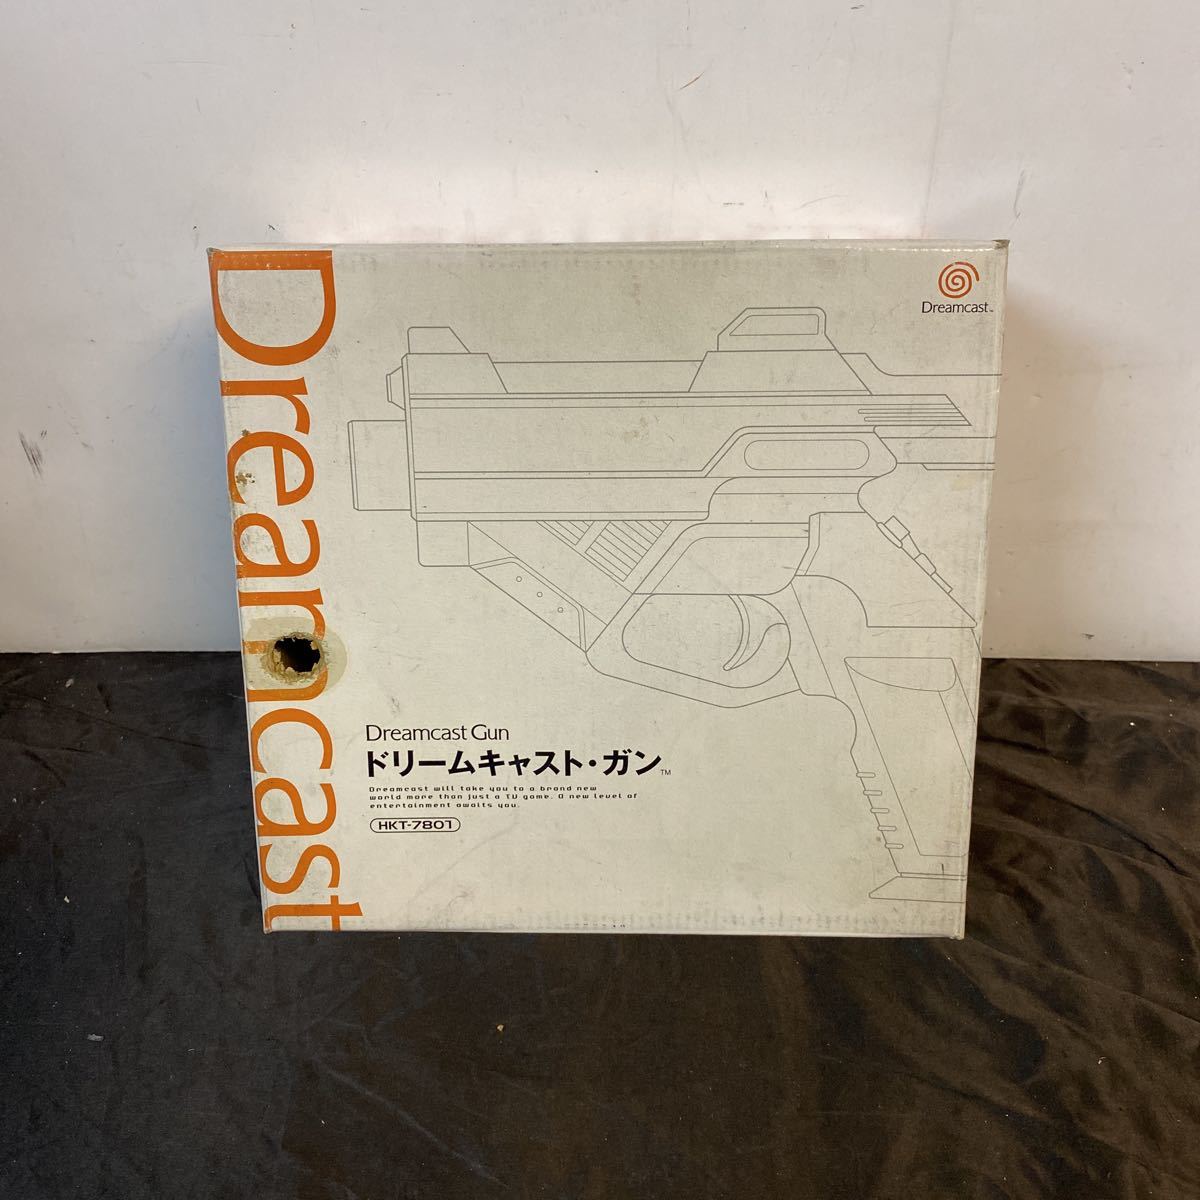 DC ドリームキャスト・ガン 箱説明書付き 動作未確認 Dreamcast Gun ドリキャスガン